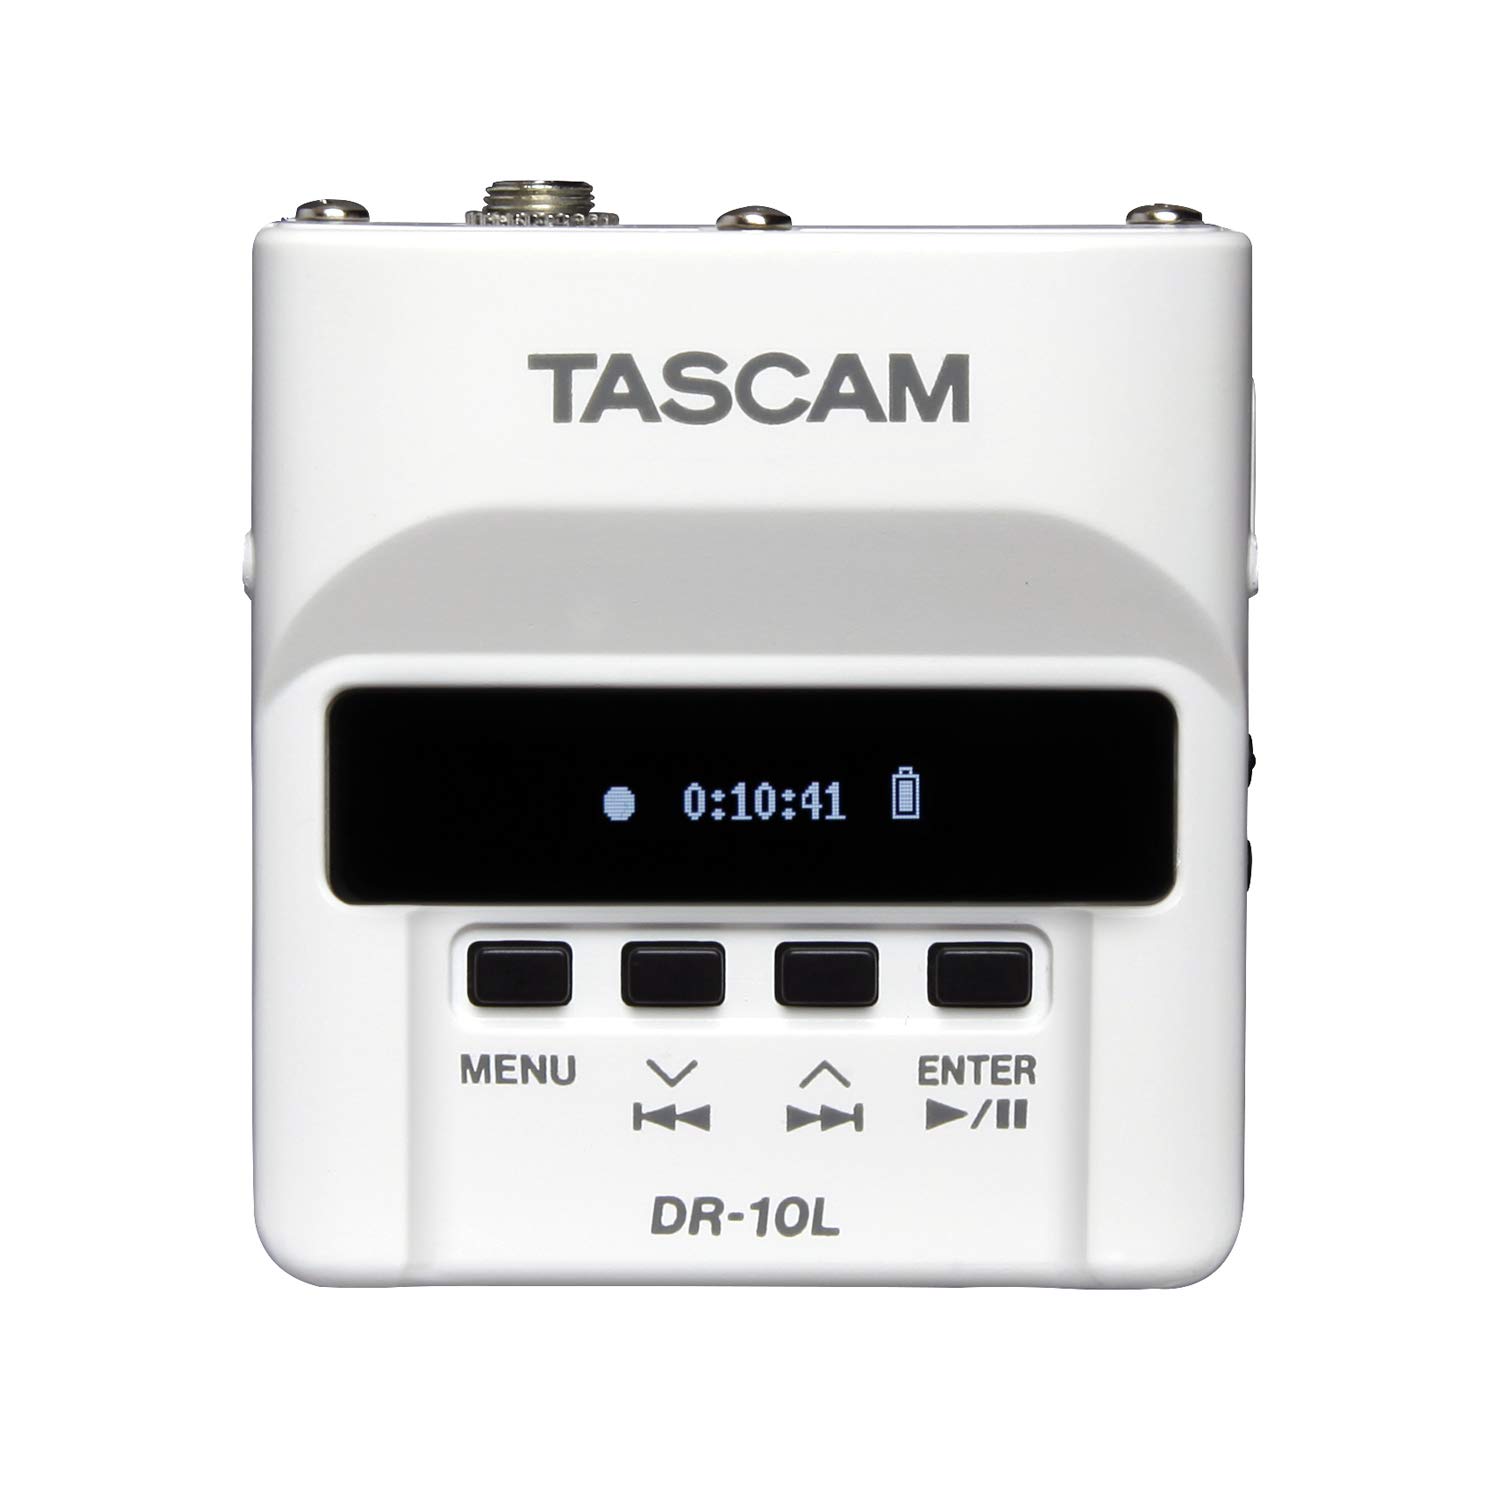 Tascam - Micro Portable Digital Audio Recorder with Lavalier Microphone, AV recording, interview recording 24-Bit/48 kHz BWAV File Format, White (DR-10WL)